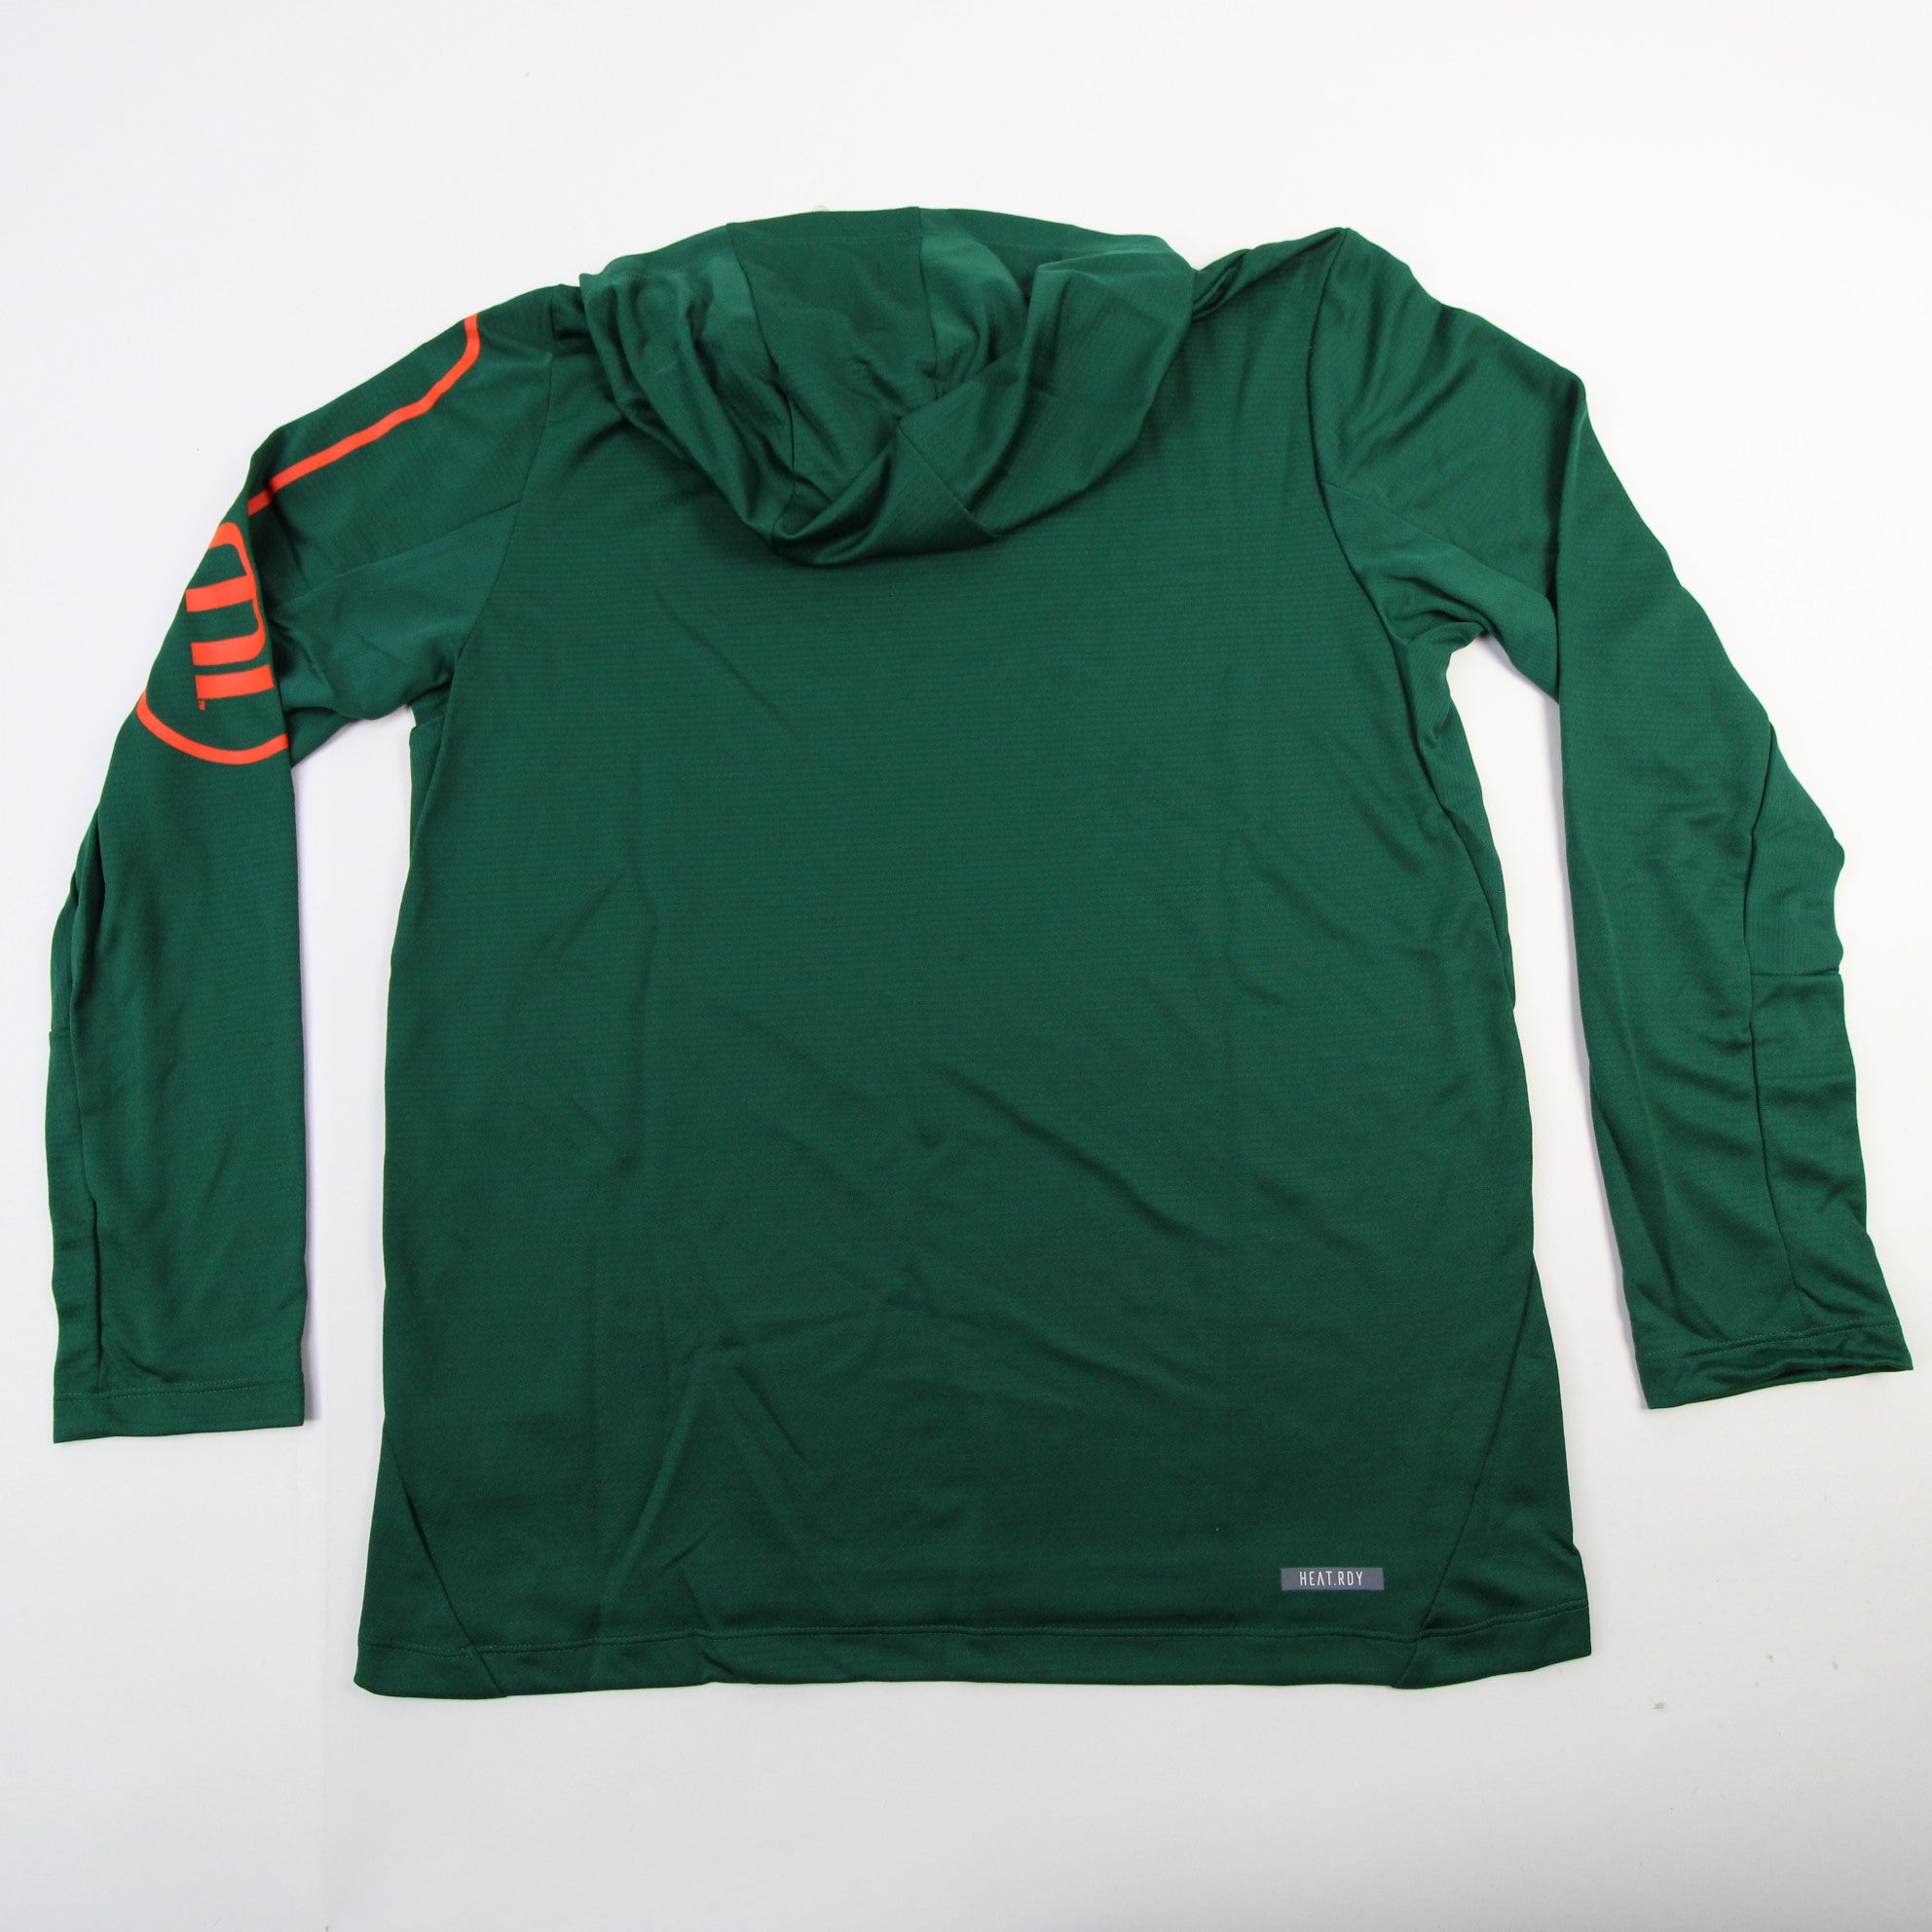 Miami Hurricanes adidas Primegreen Short Sleeve Shirt Men's Orange New L